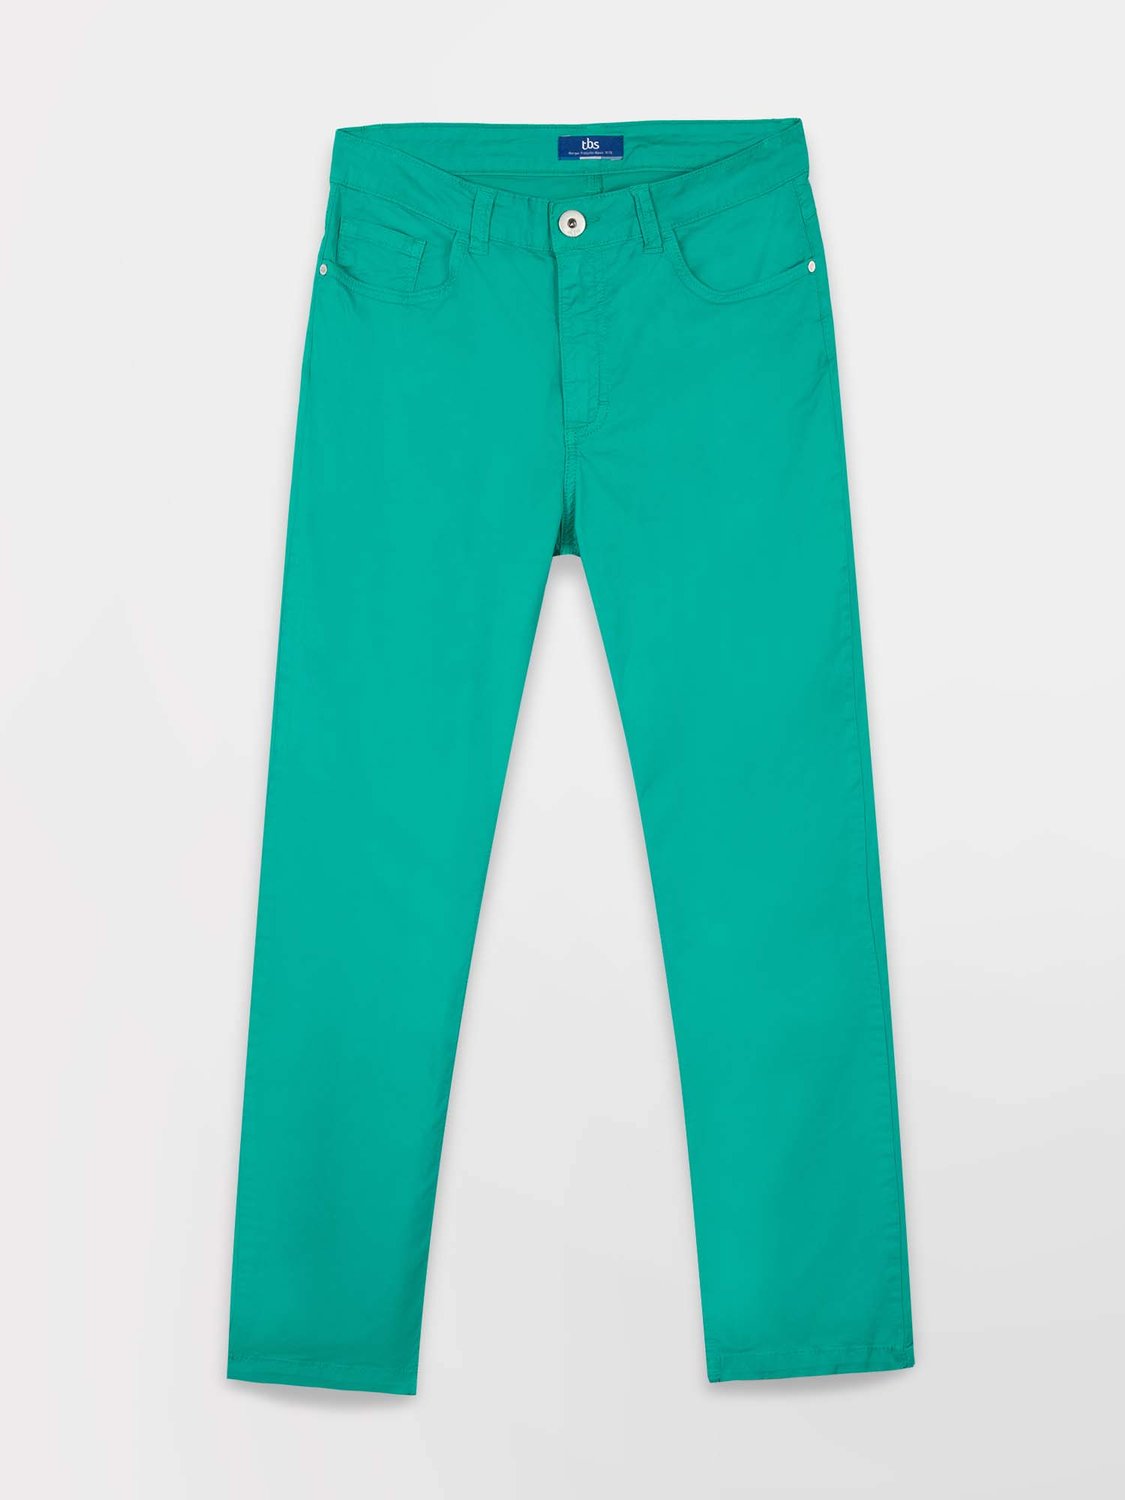 Pantalon Femme 7/8 Coton Stretch Vert